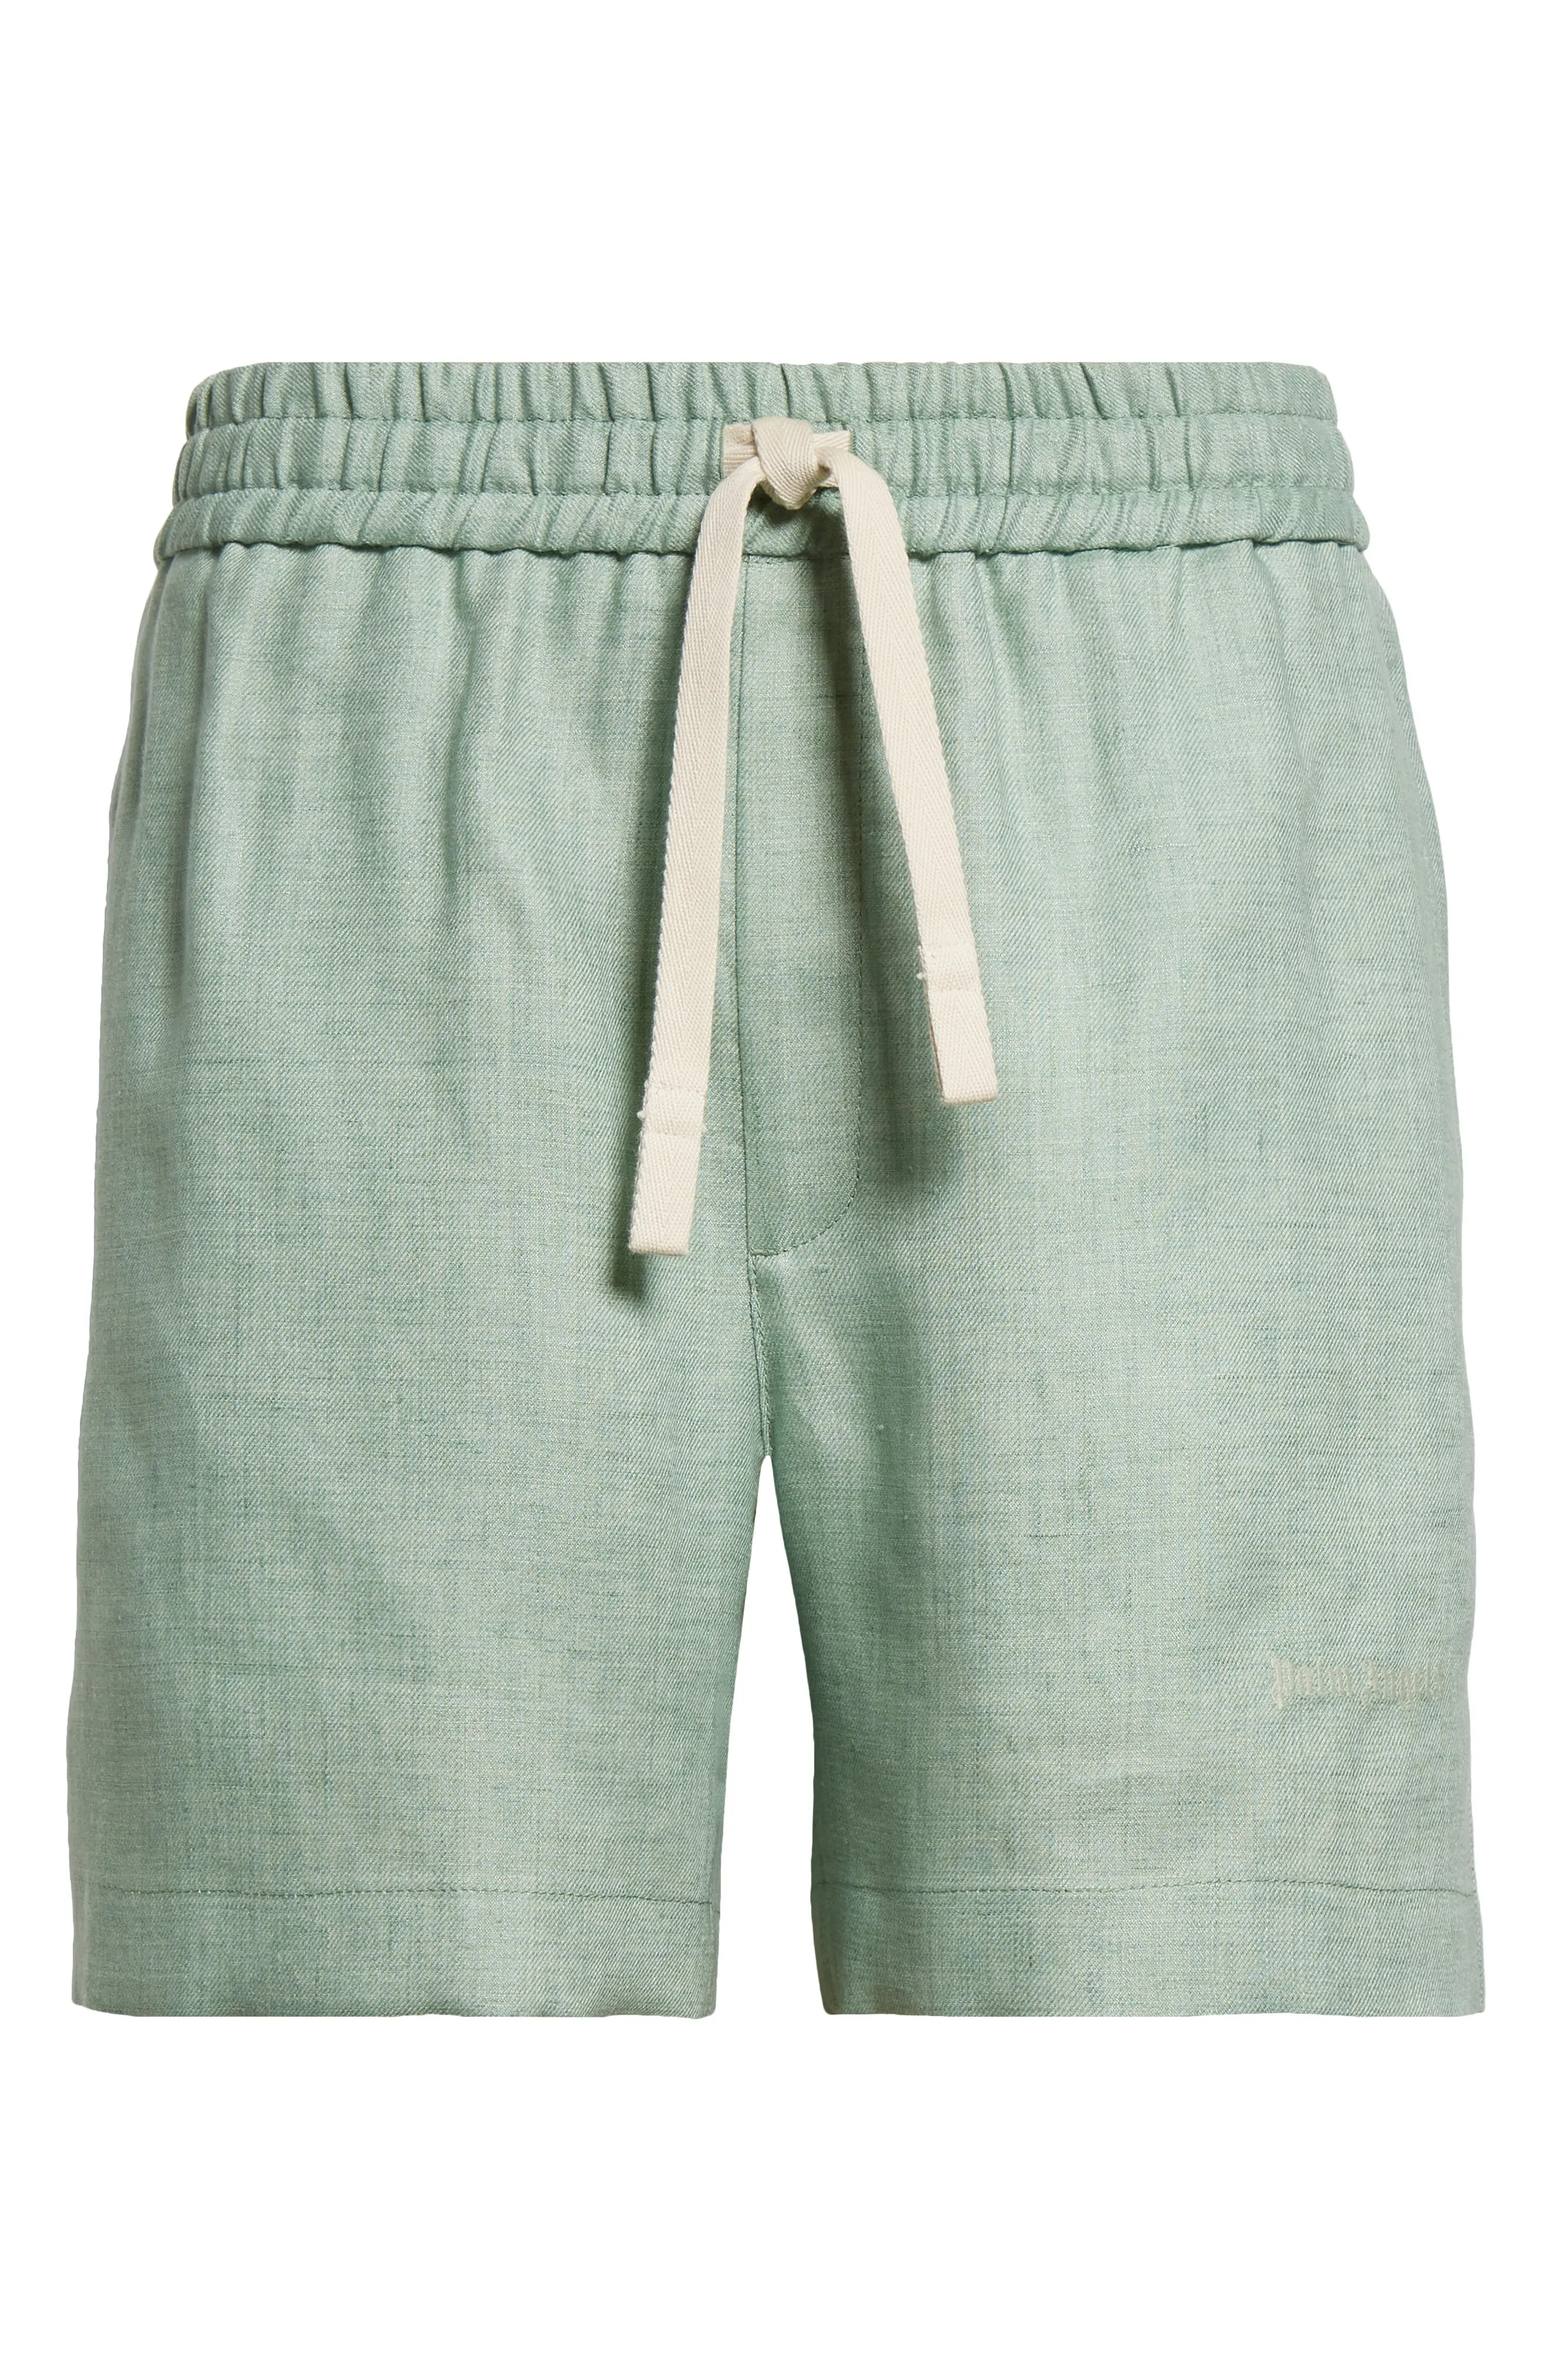 Classic Linen Drawstring Shorts - 5